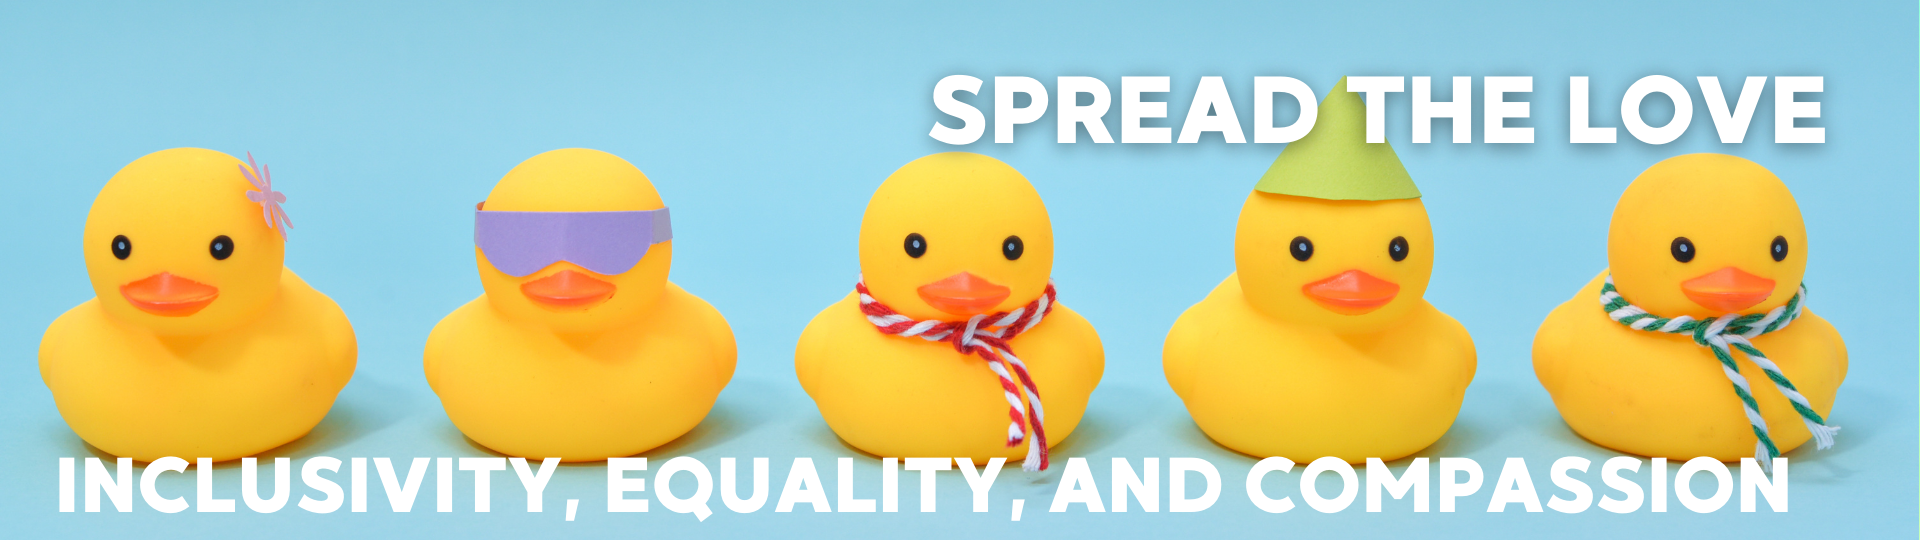 Equality ducks